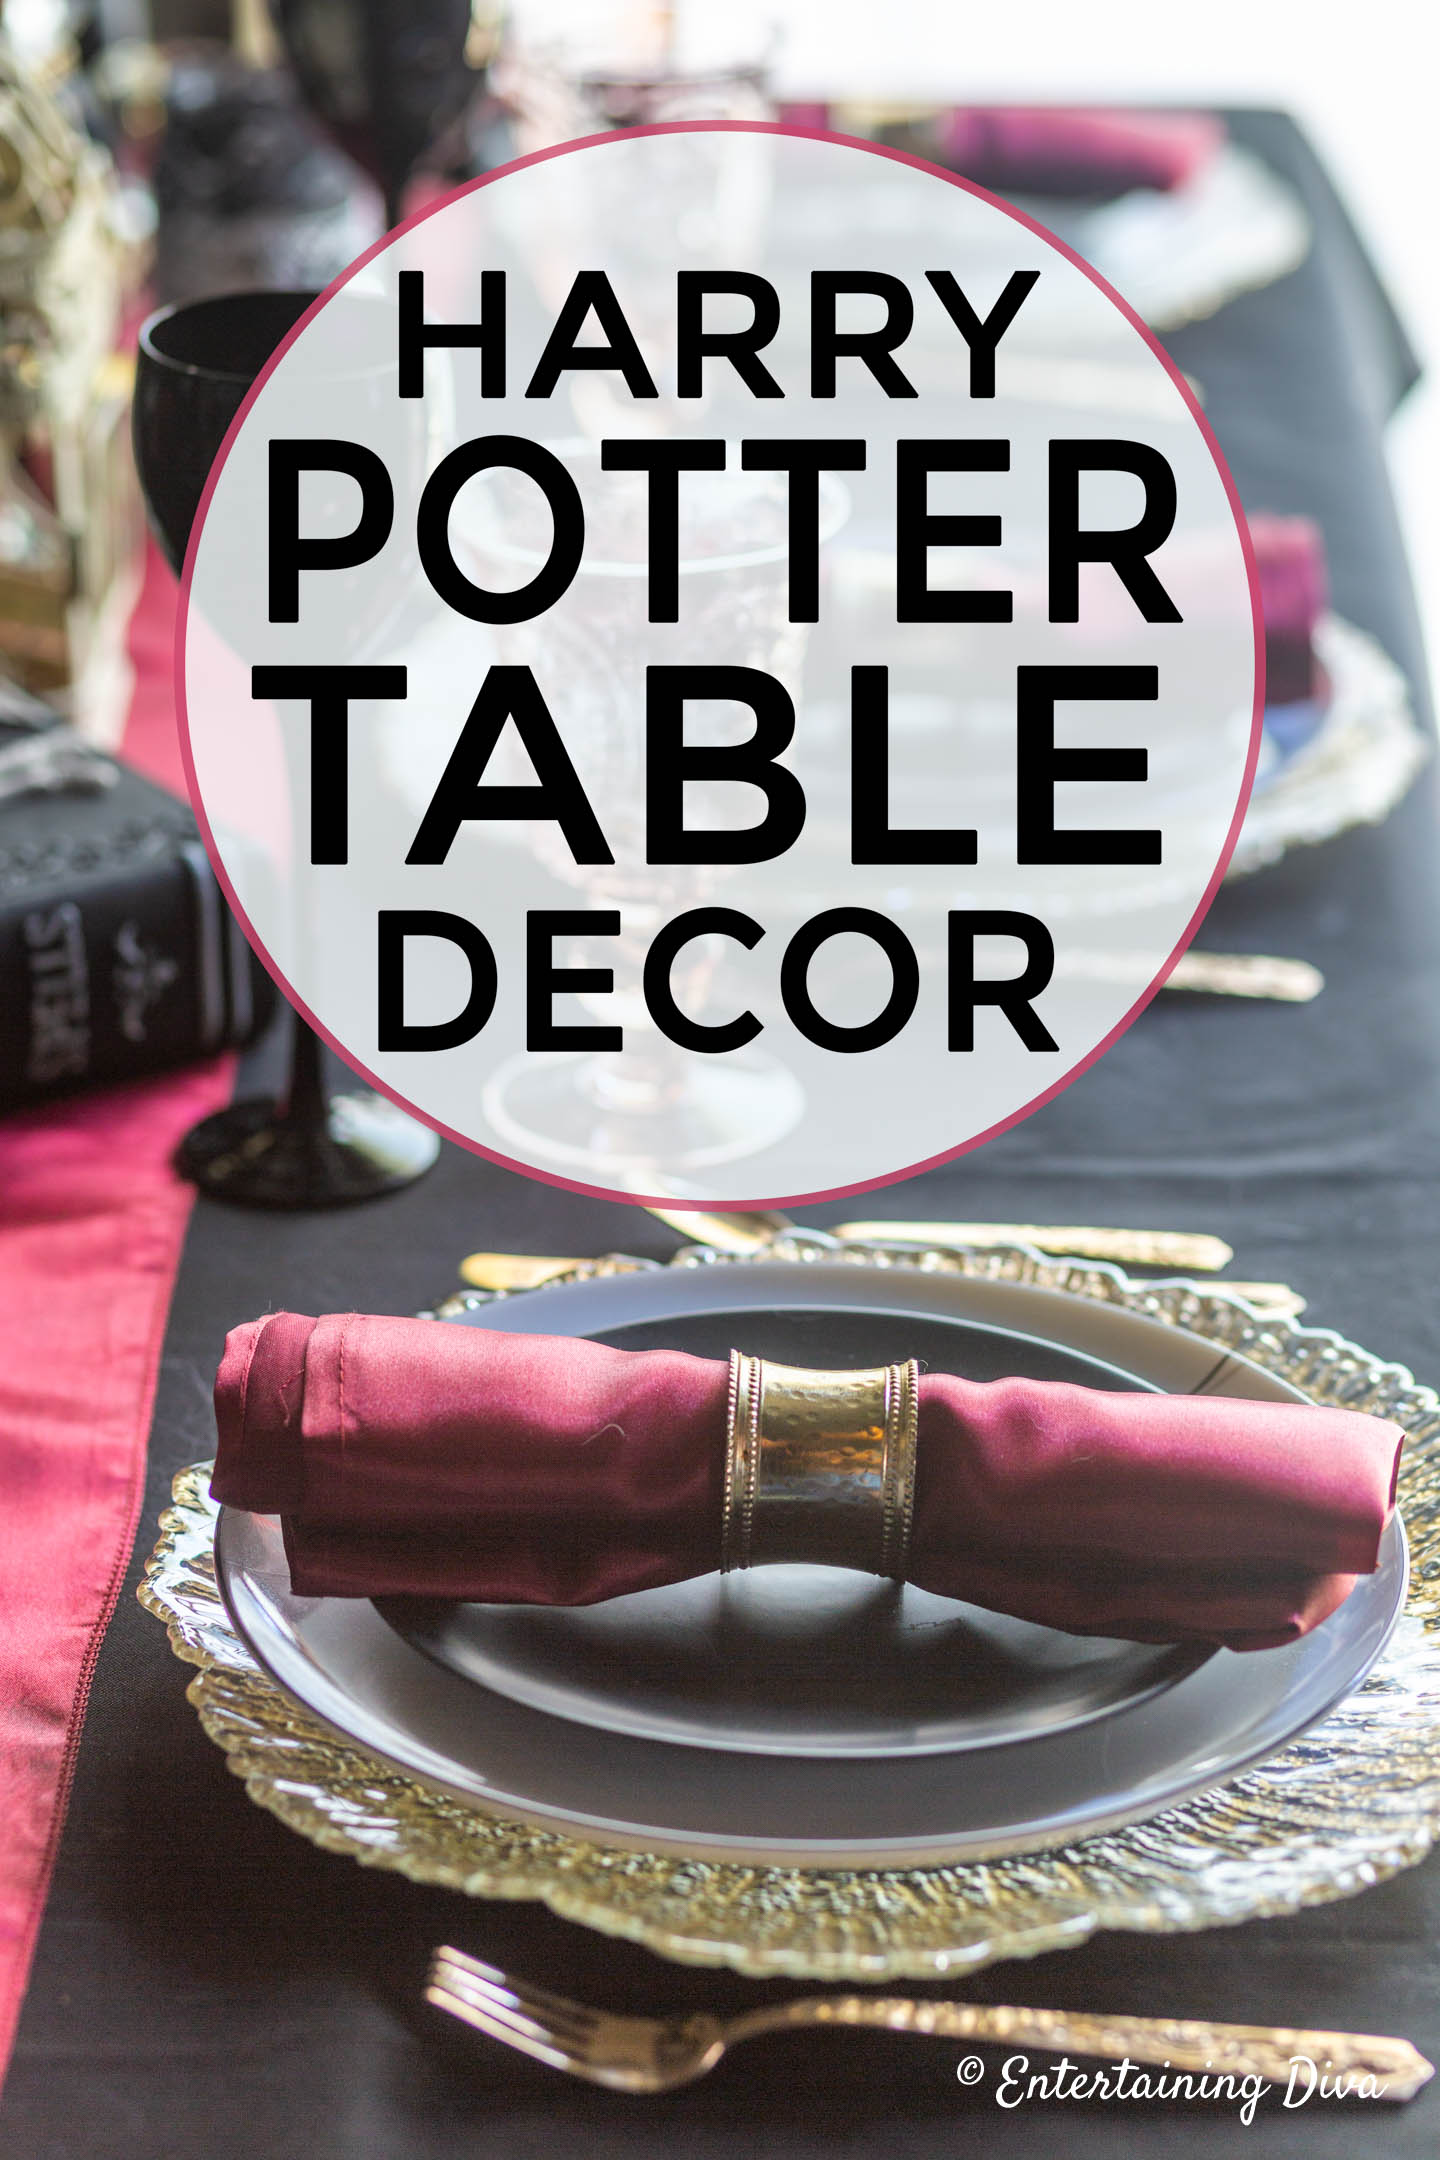 Harry Potter table decor ideas